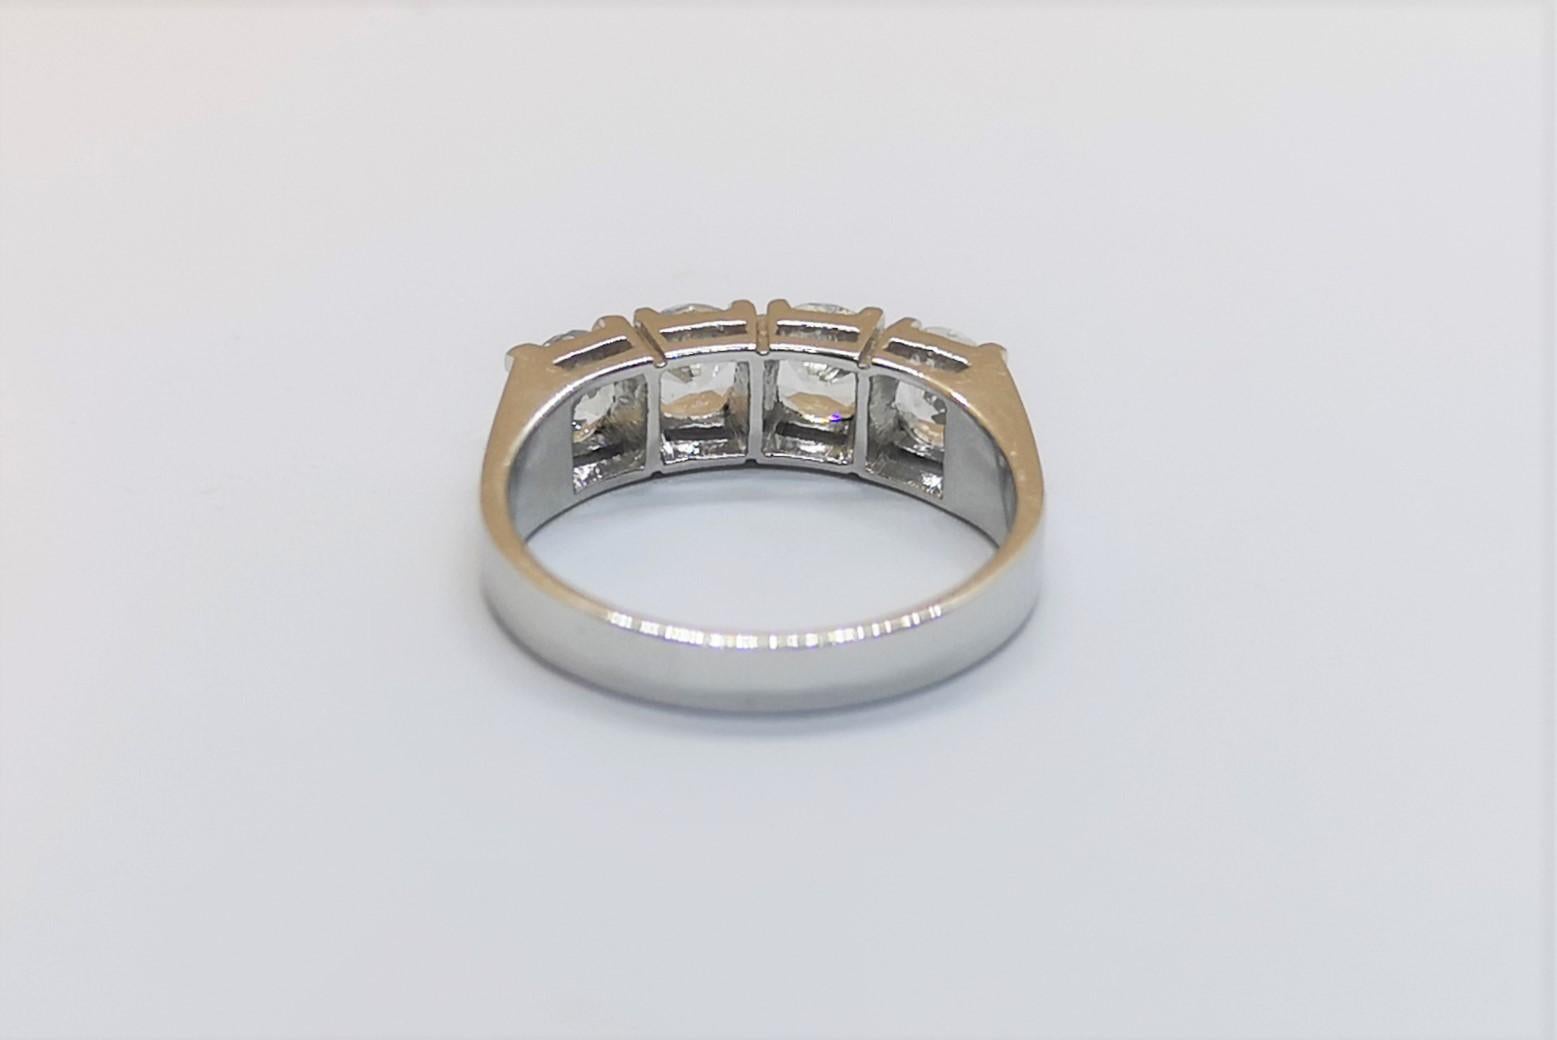 White Sapphire 1.83 carats Ring set in 18 Karat White Gold Settings

Width: 1.7 cm
Length: 0.5 cm 
Ring Size: 54

